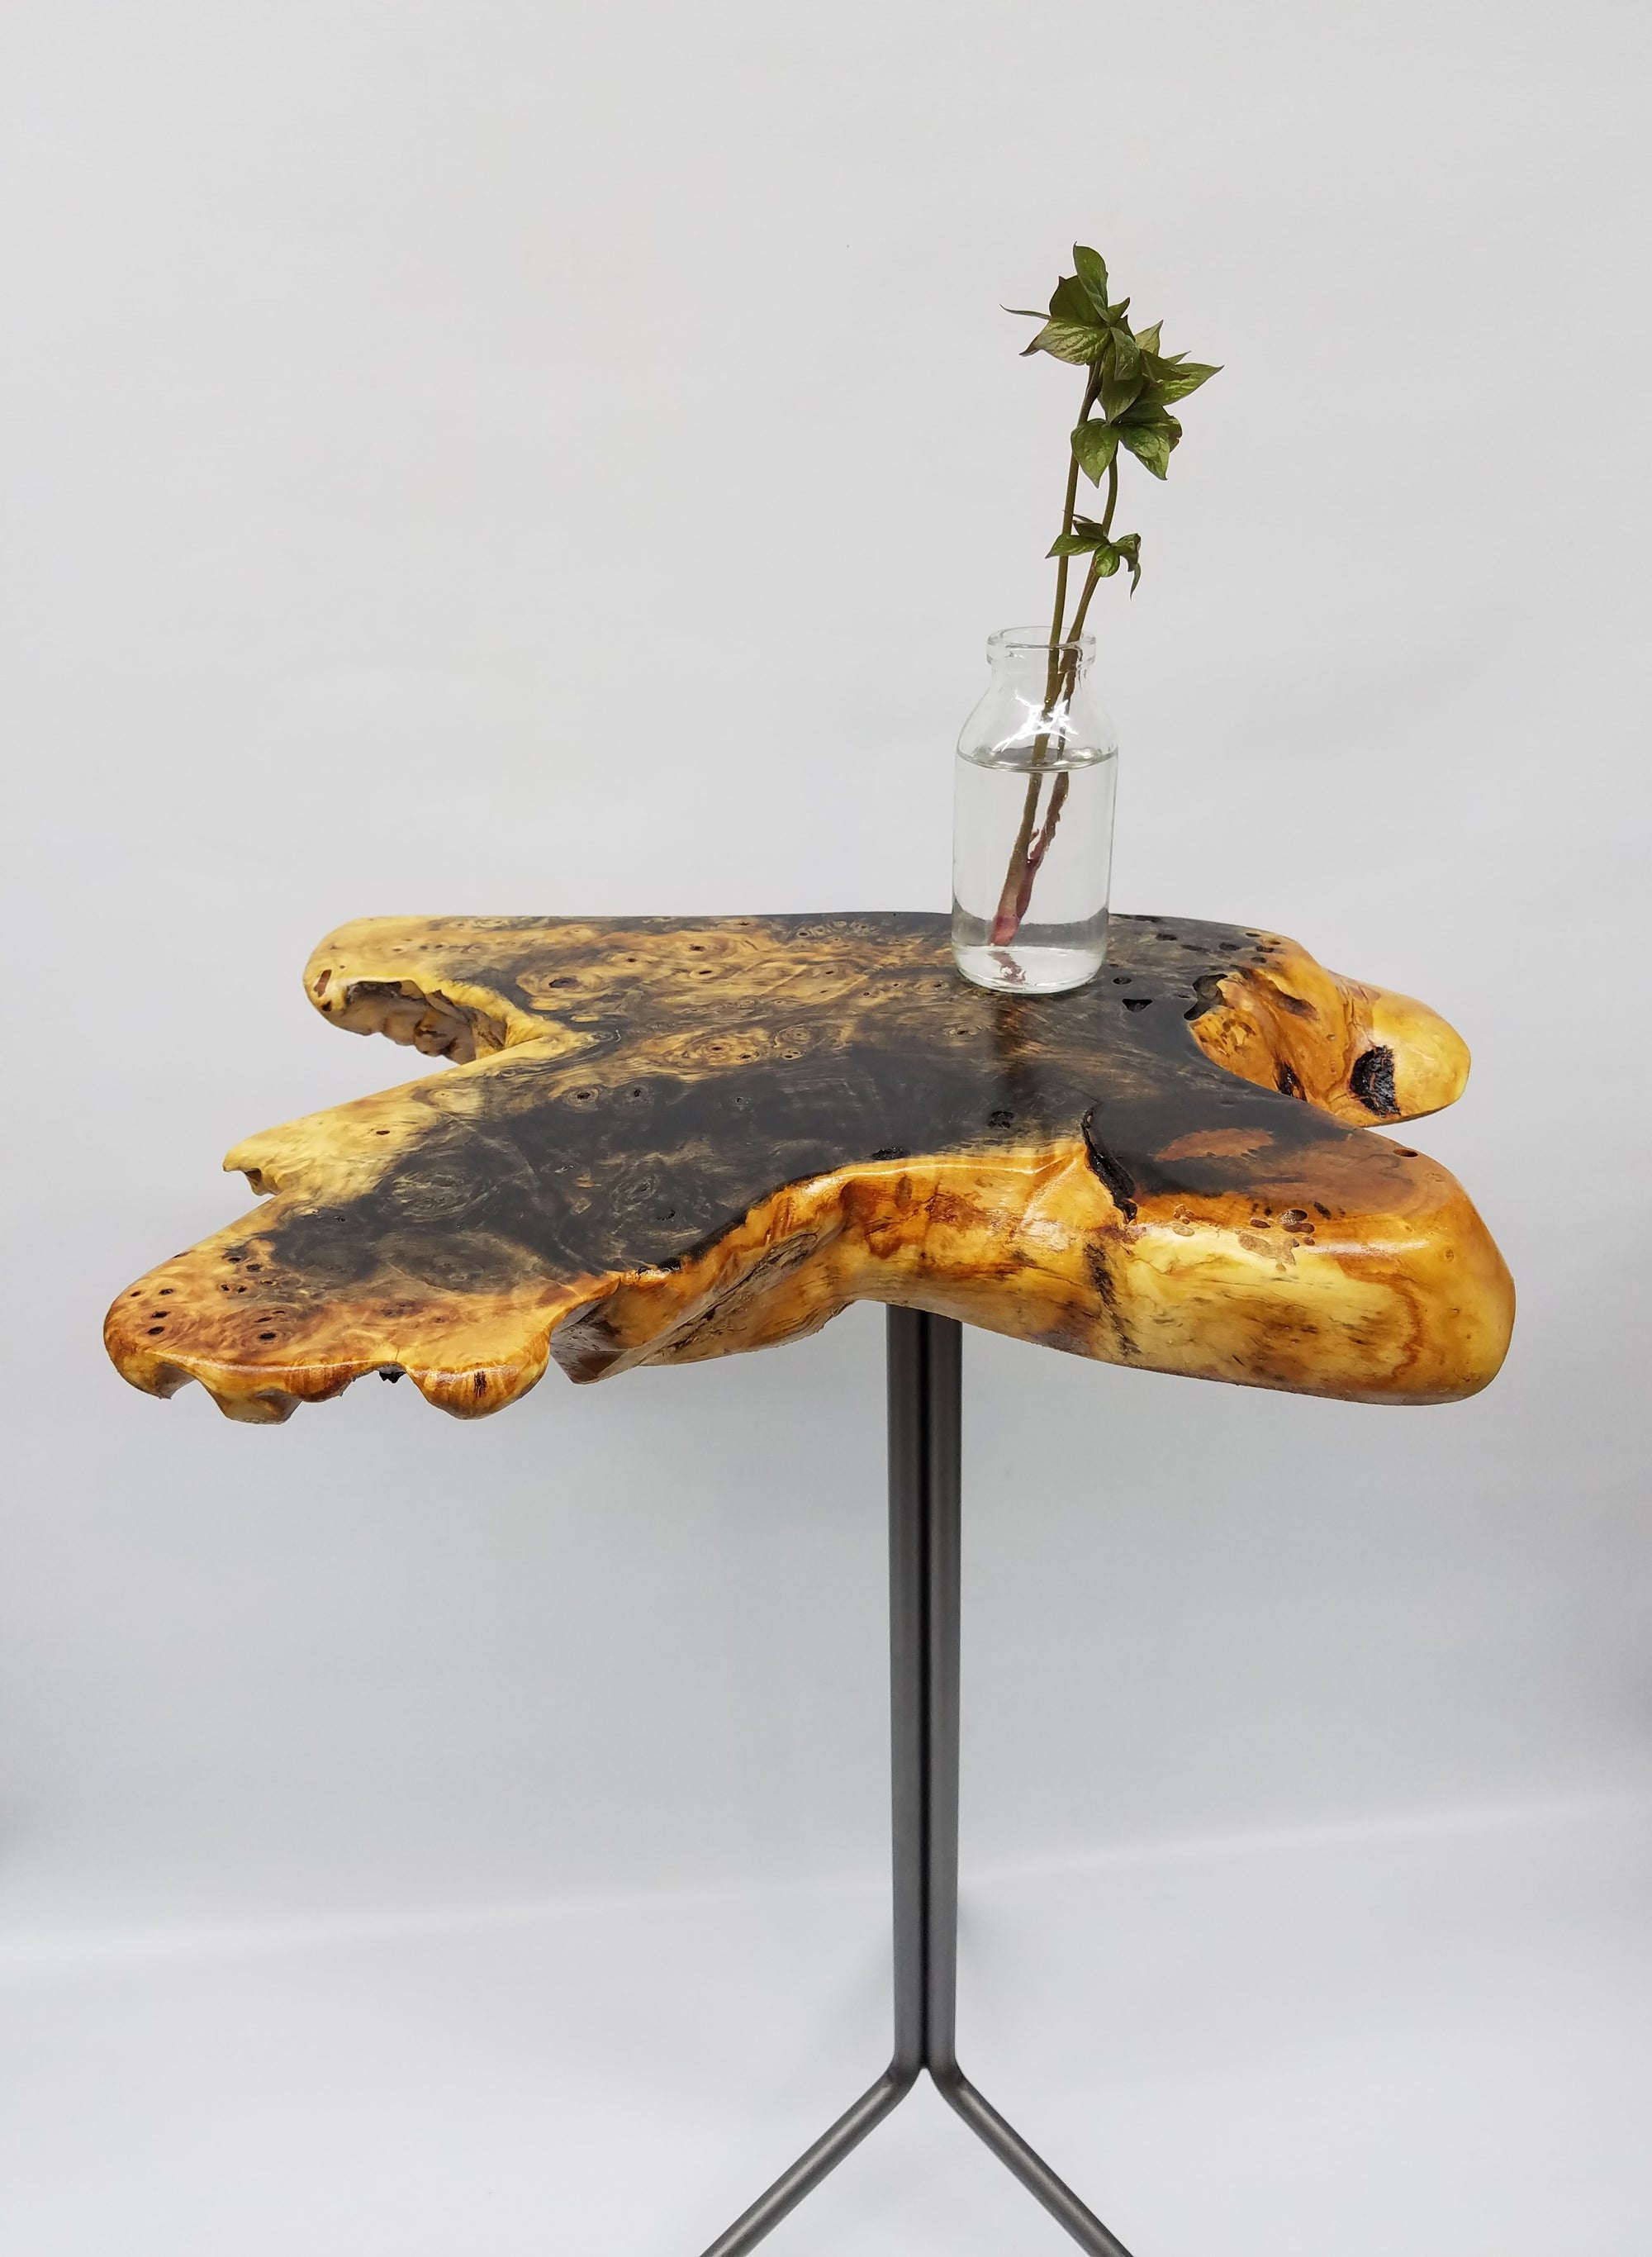 Buckeye Burl Side Table- End Table- Plant Stand- Tree Slice- Live Edge- Natural Wood- Industrial- Mid Century- Steel- Slab Table- Artistic